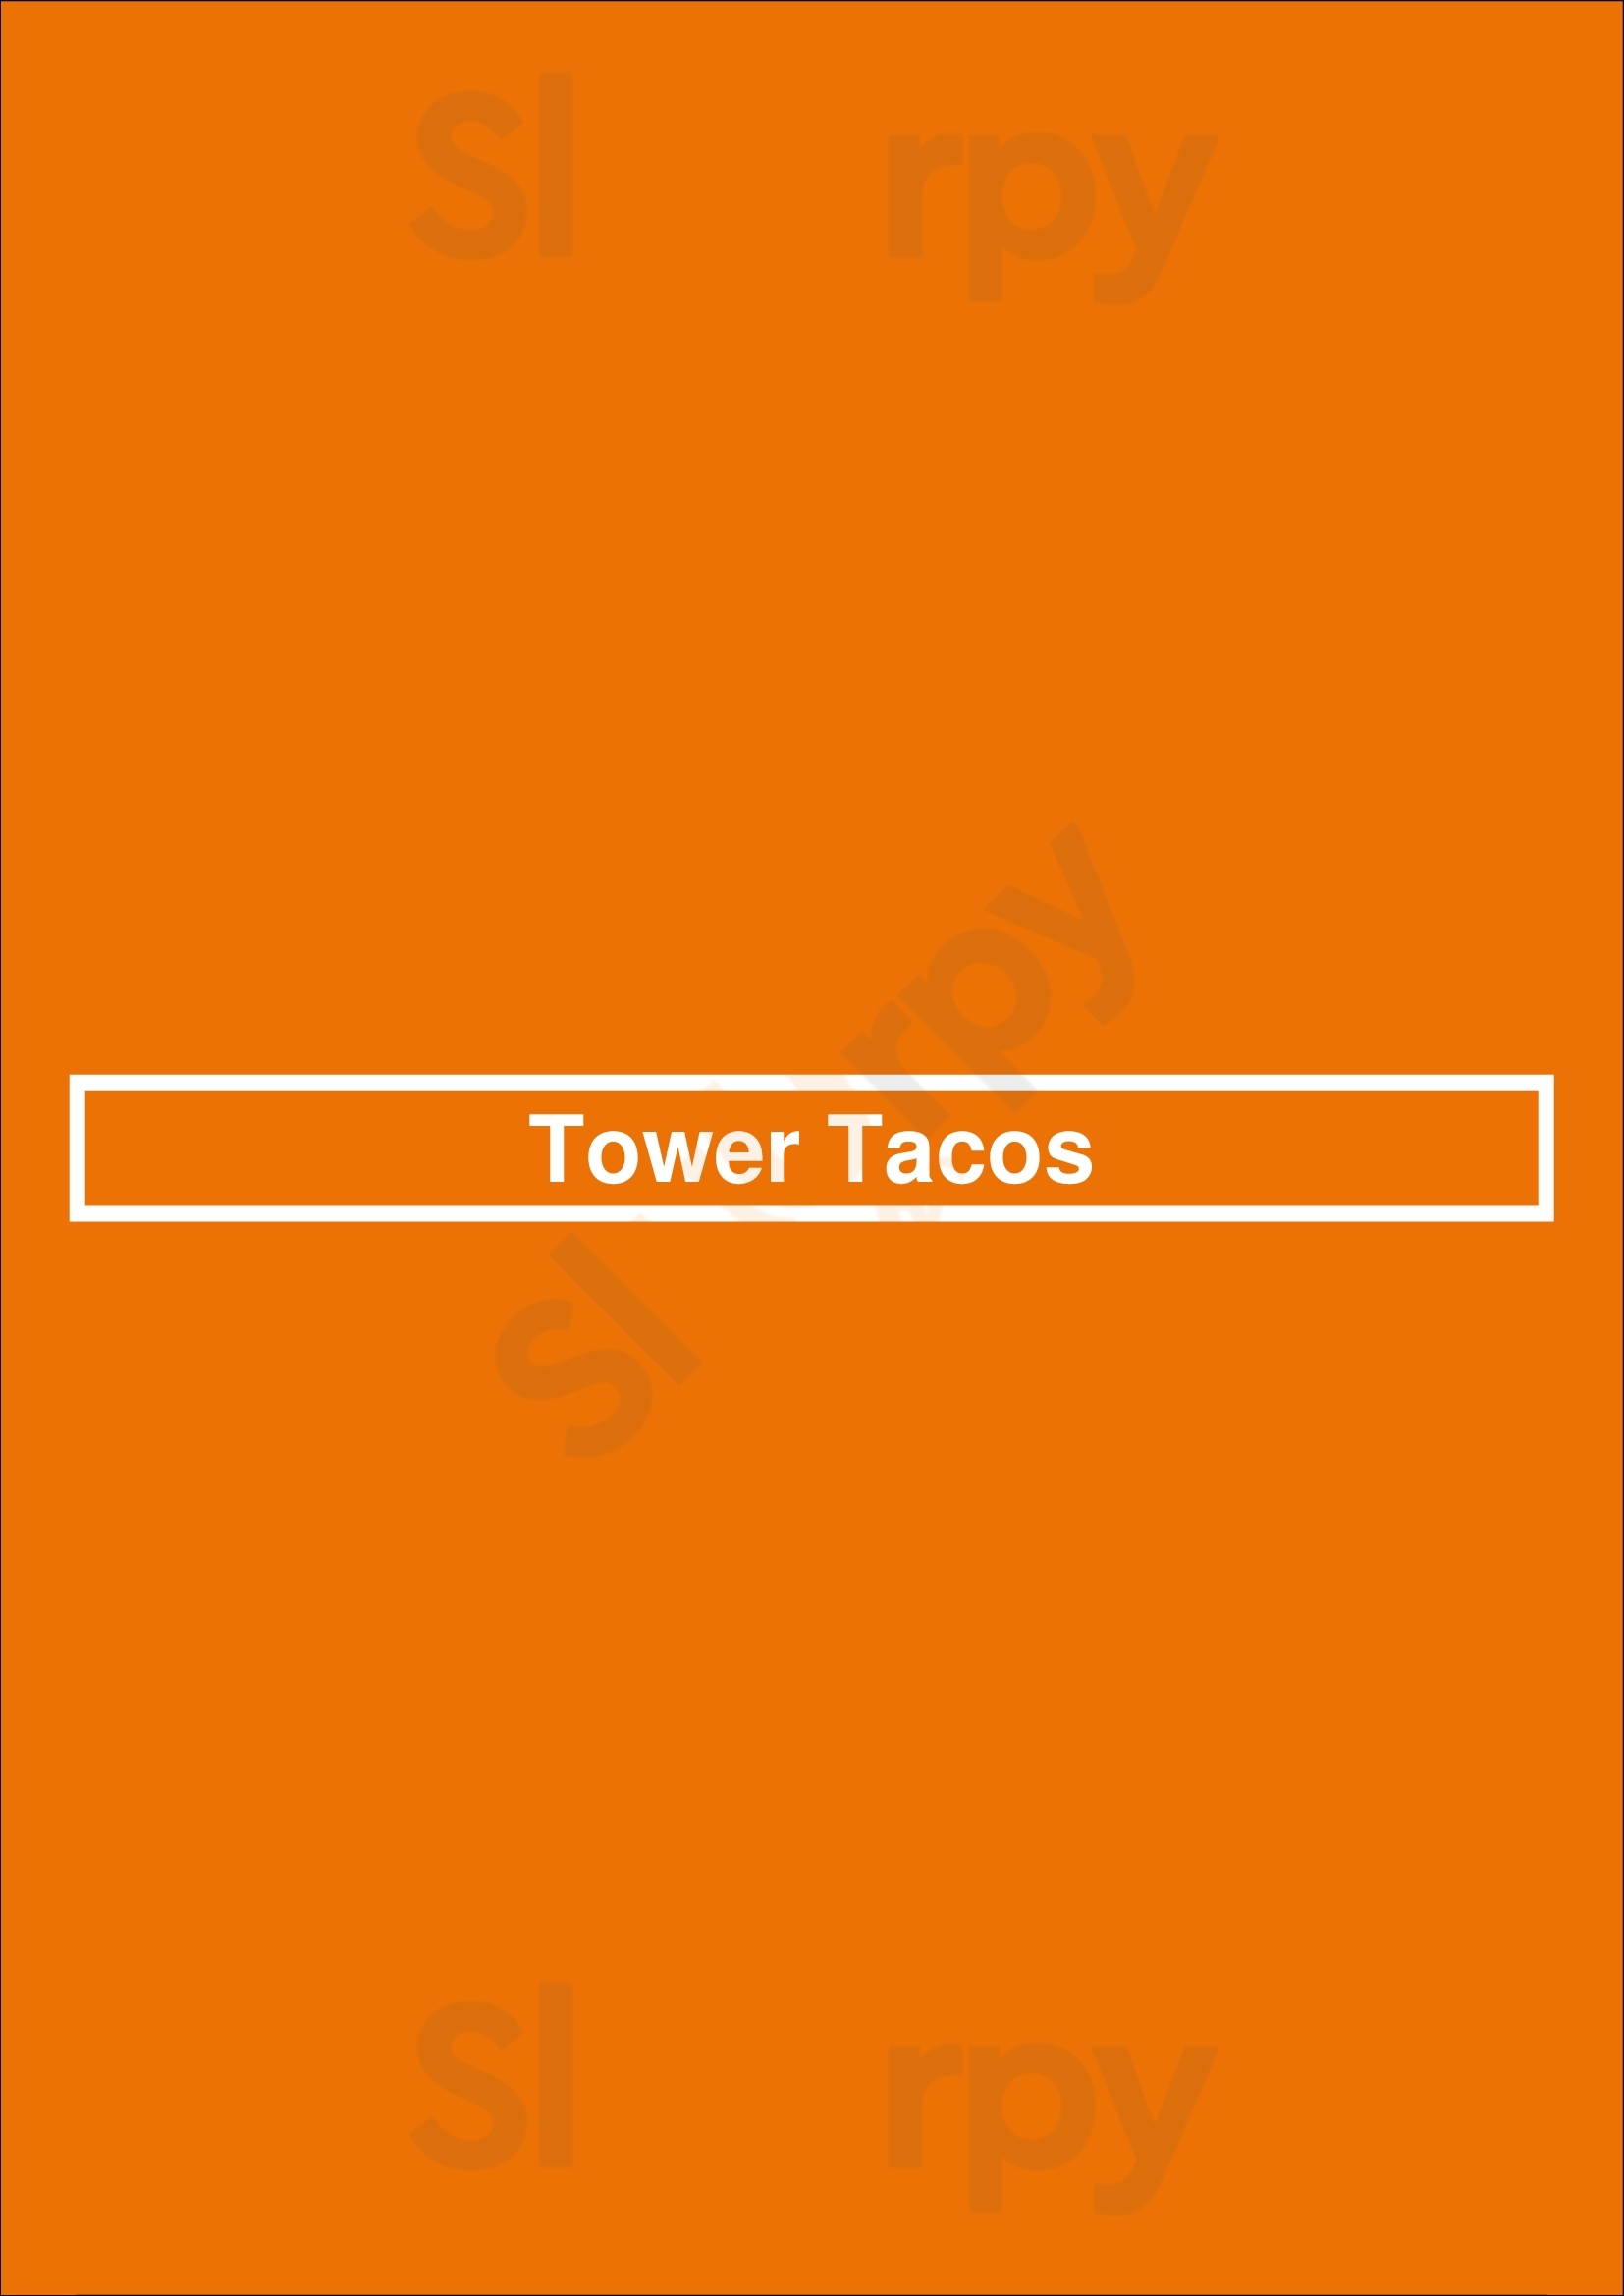 Tower Tacos Saint Louis Menu - 1